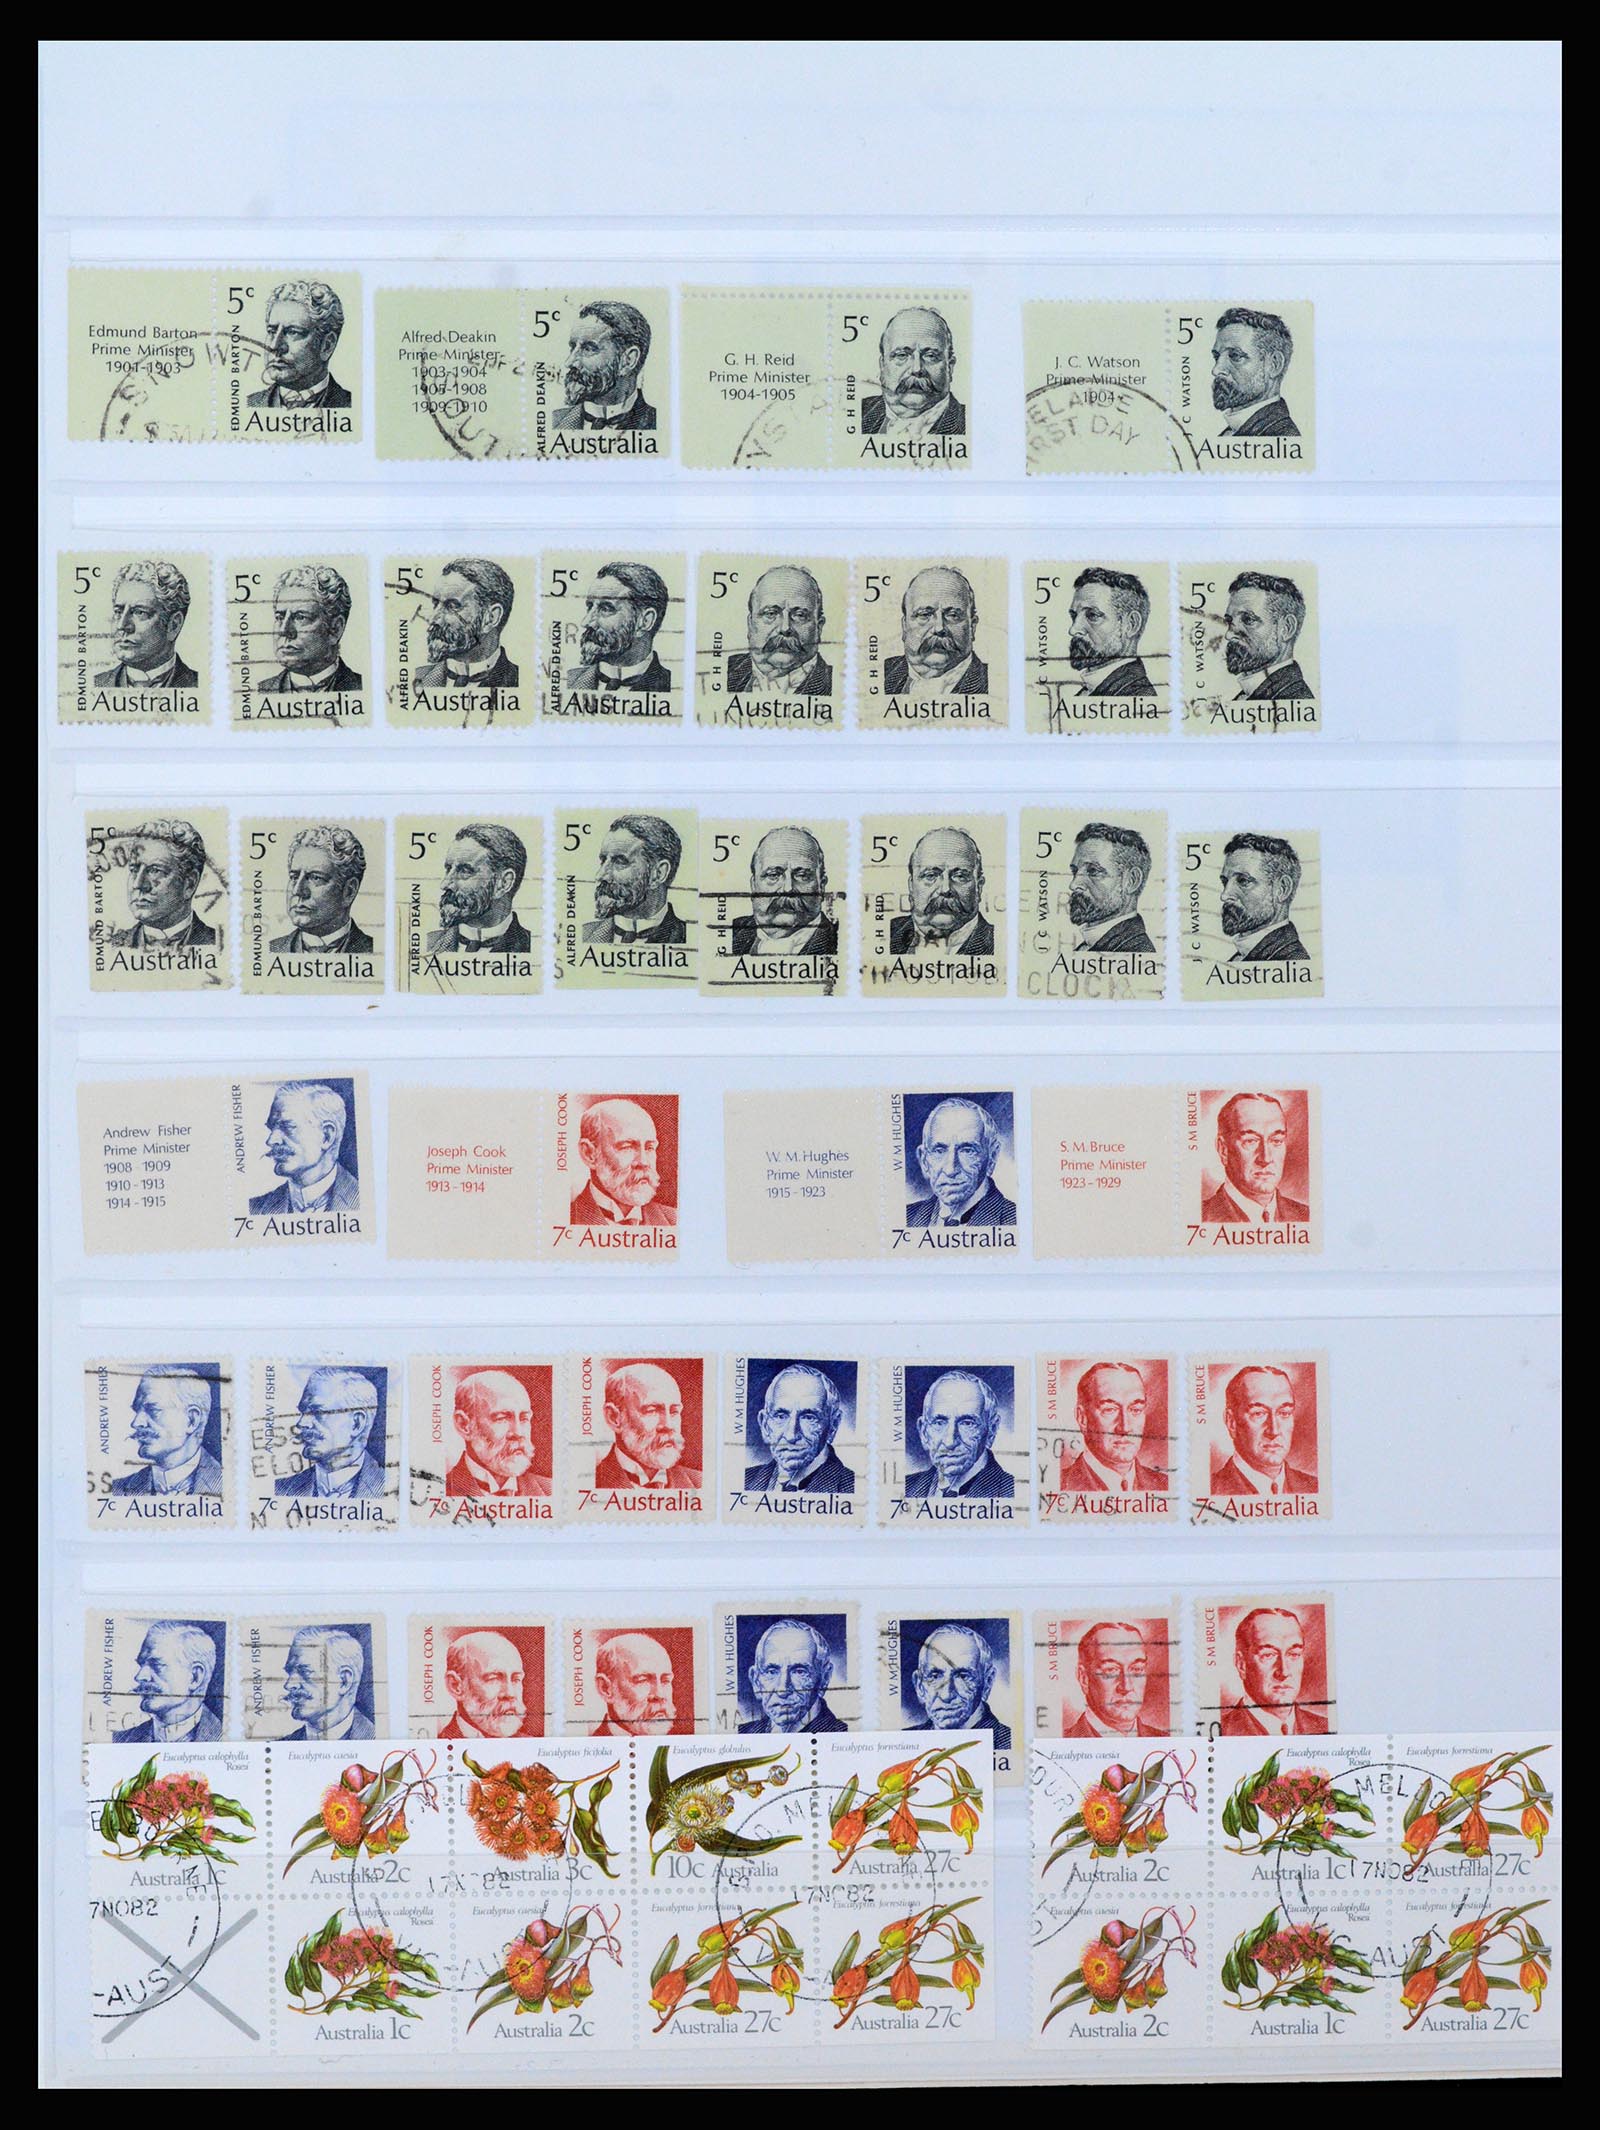 37259 018 - Stamp collection 37259 Australia 1951-2006.